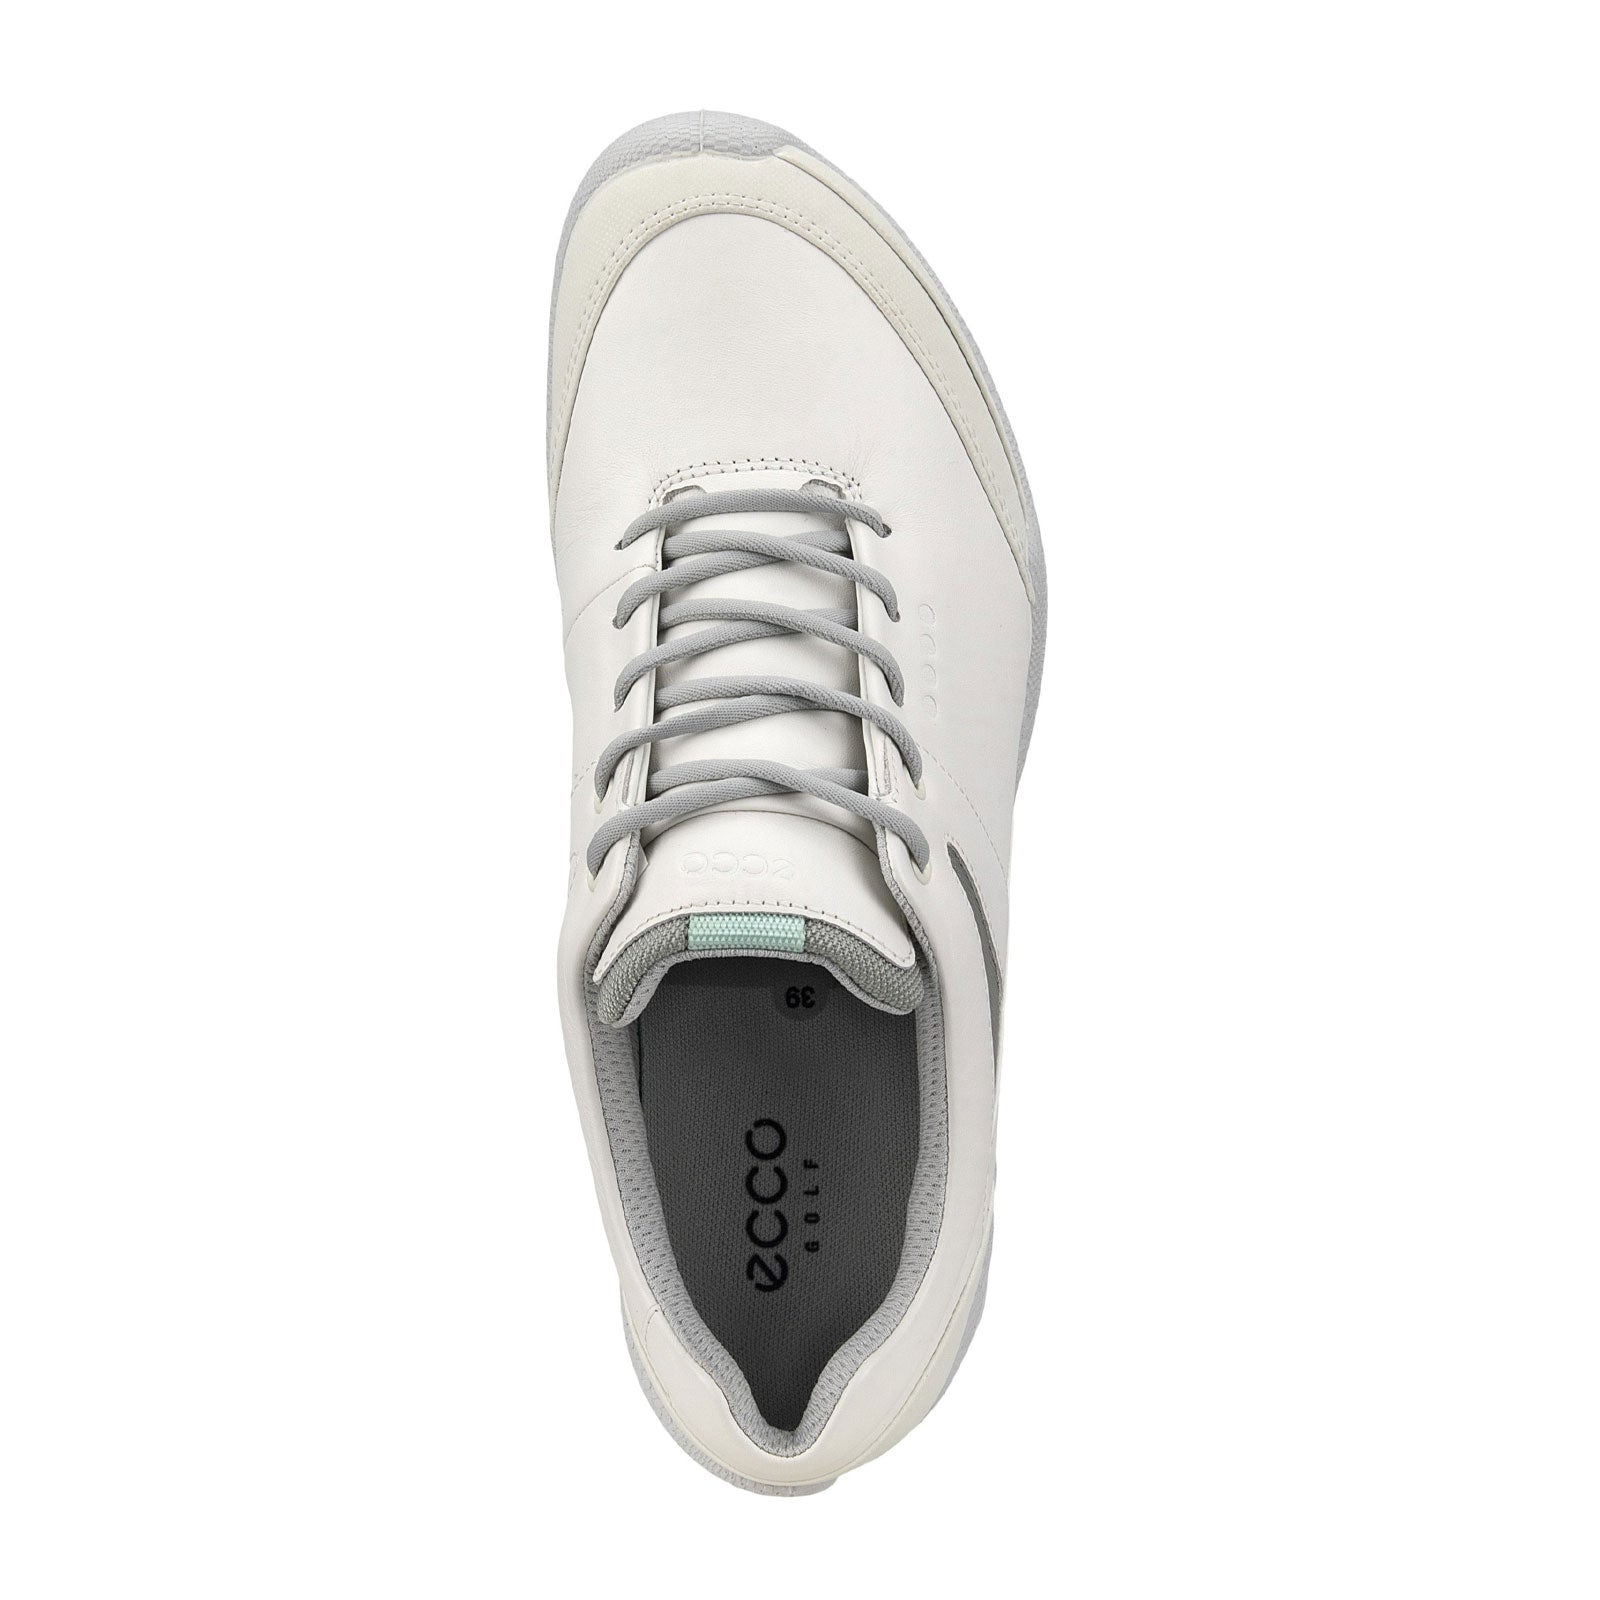 Ecco Biom Golf Hybrid Golf Shoe (Women) - White/Concrete - The Shoe Fitters